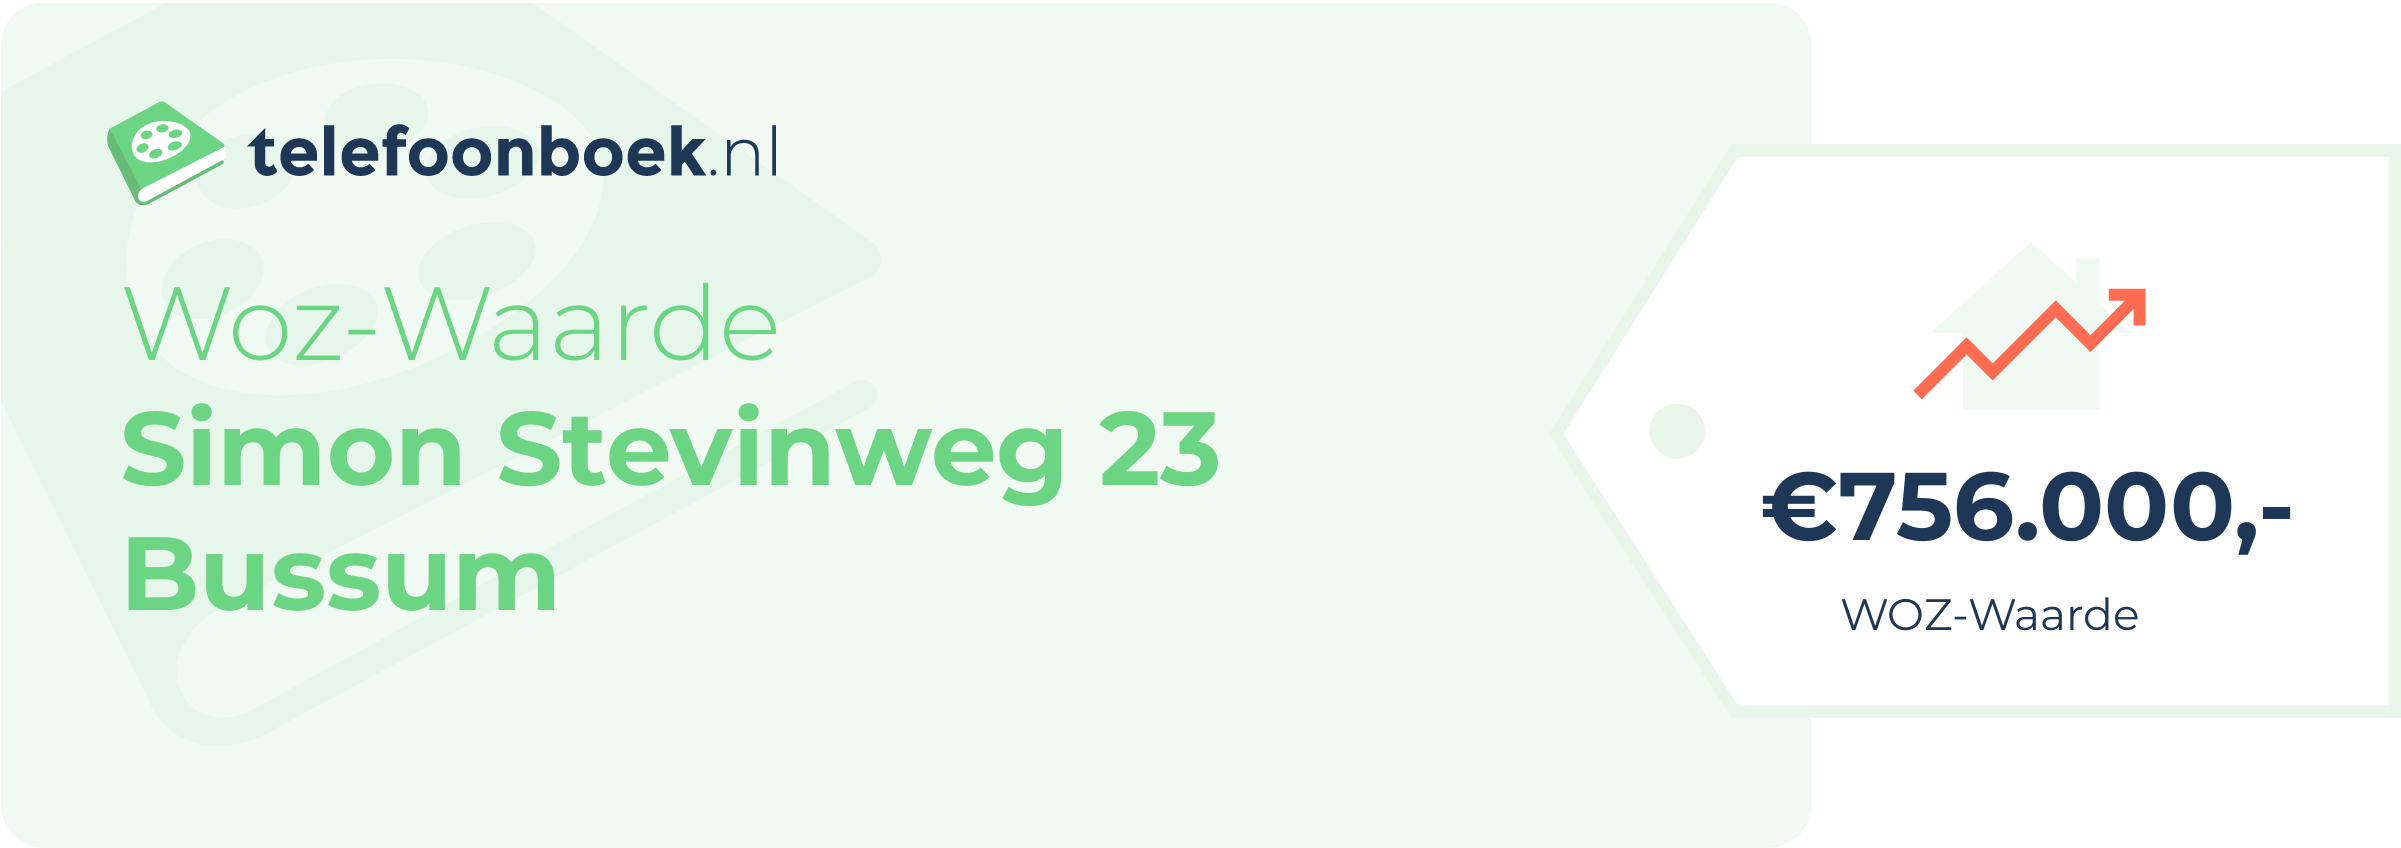 WOZ-waarde Simon Stevinweg 23 Bussum